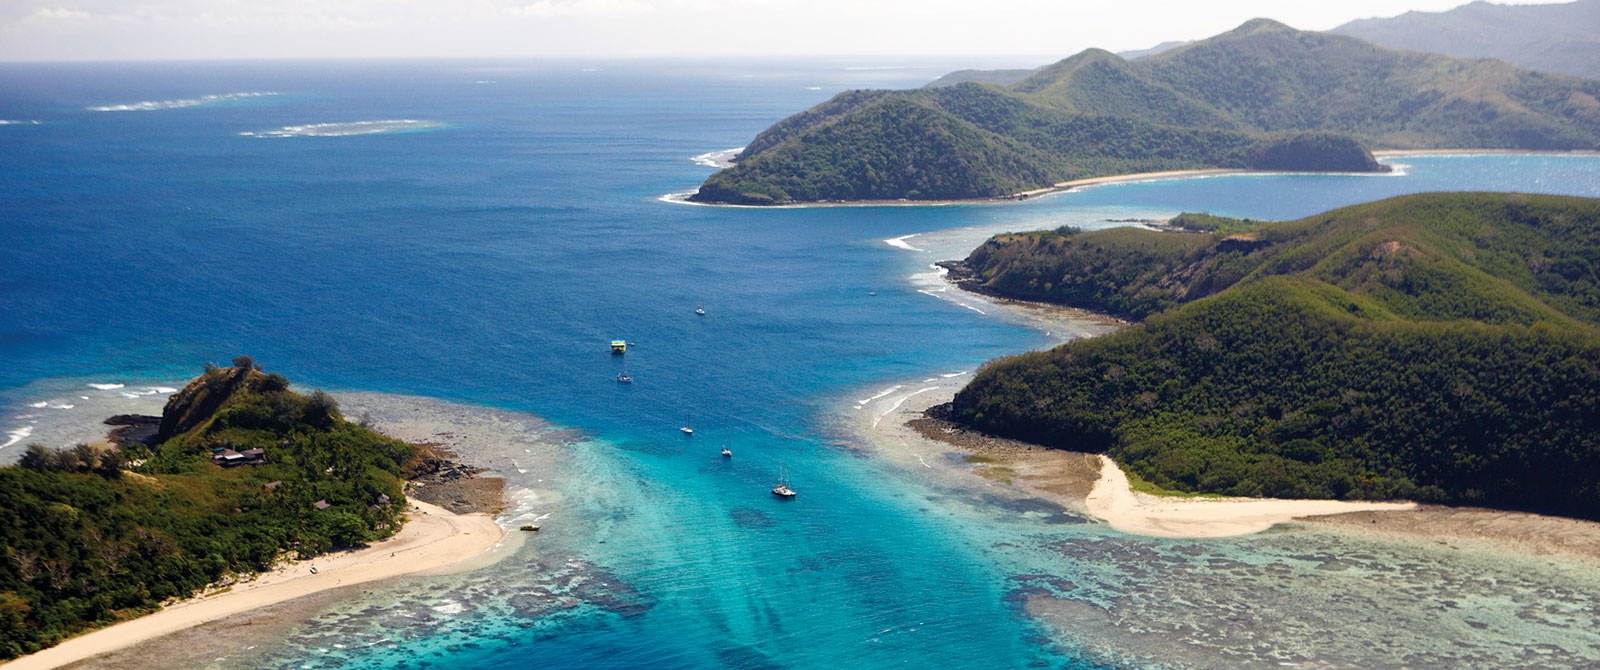 Yasawa Islands - Manta Ray Island Resort - Book Your Trip to Fiji - Fiji Travel Agency